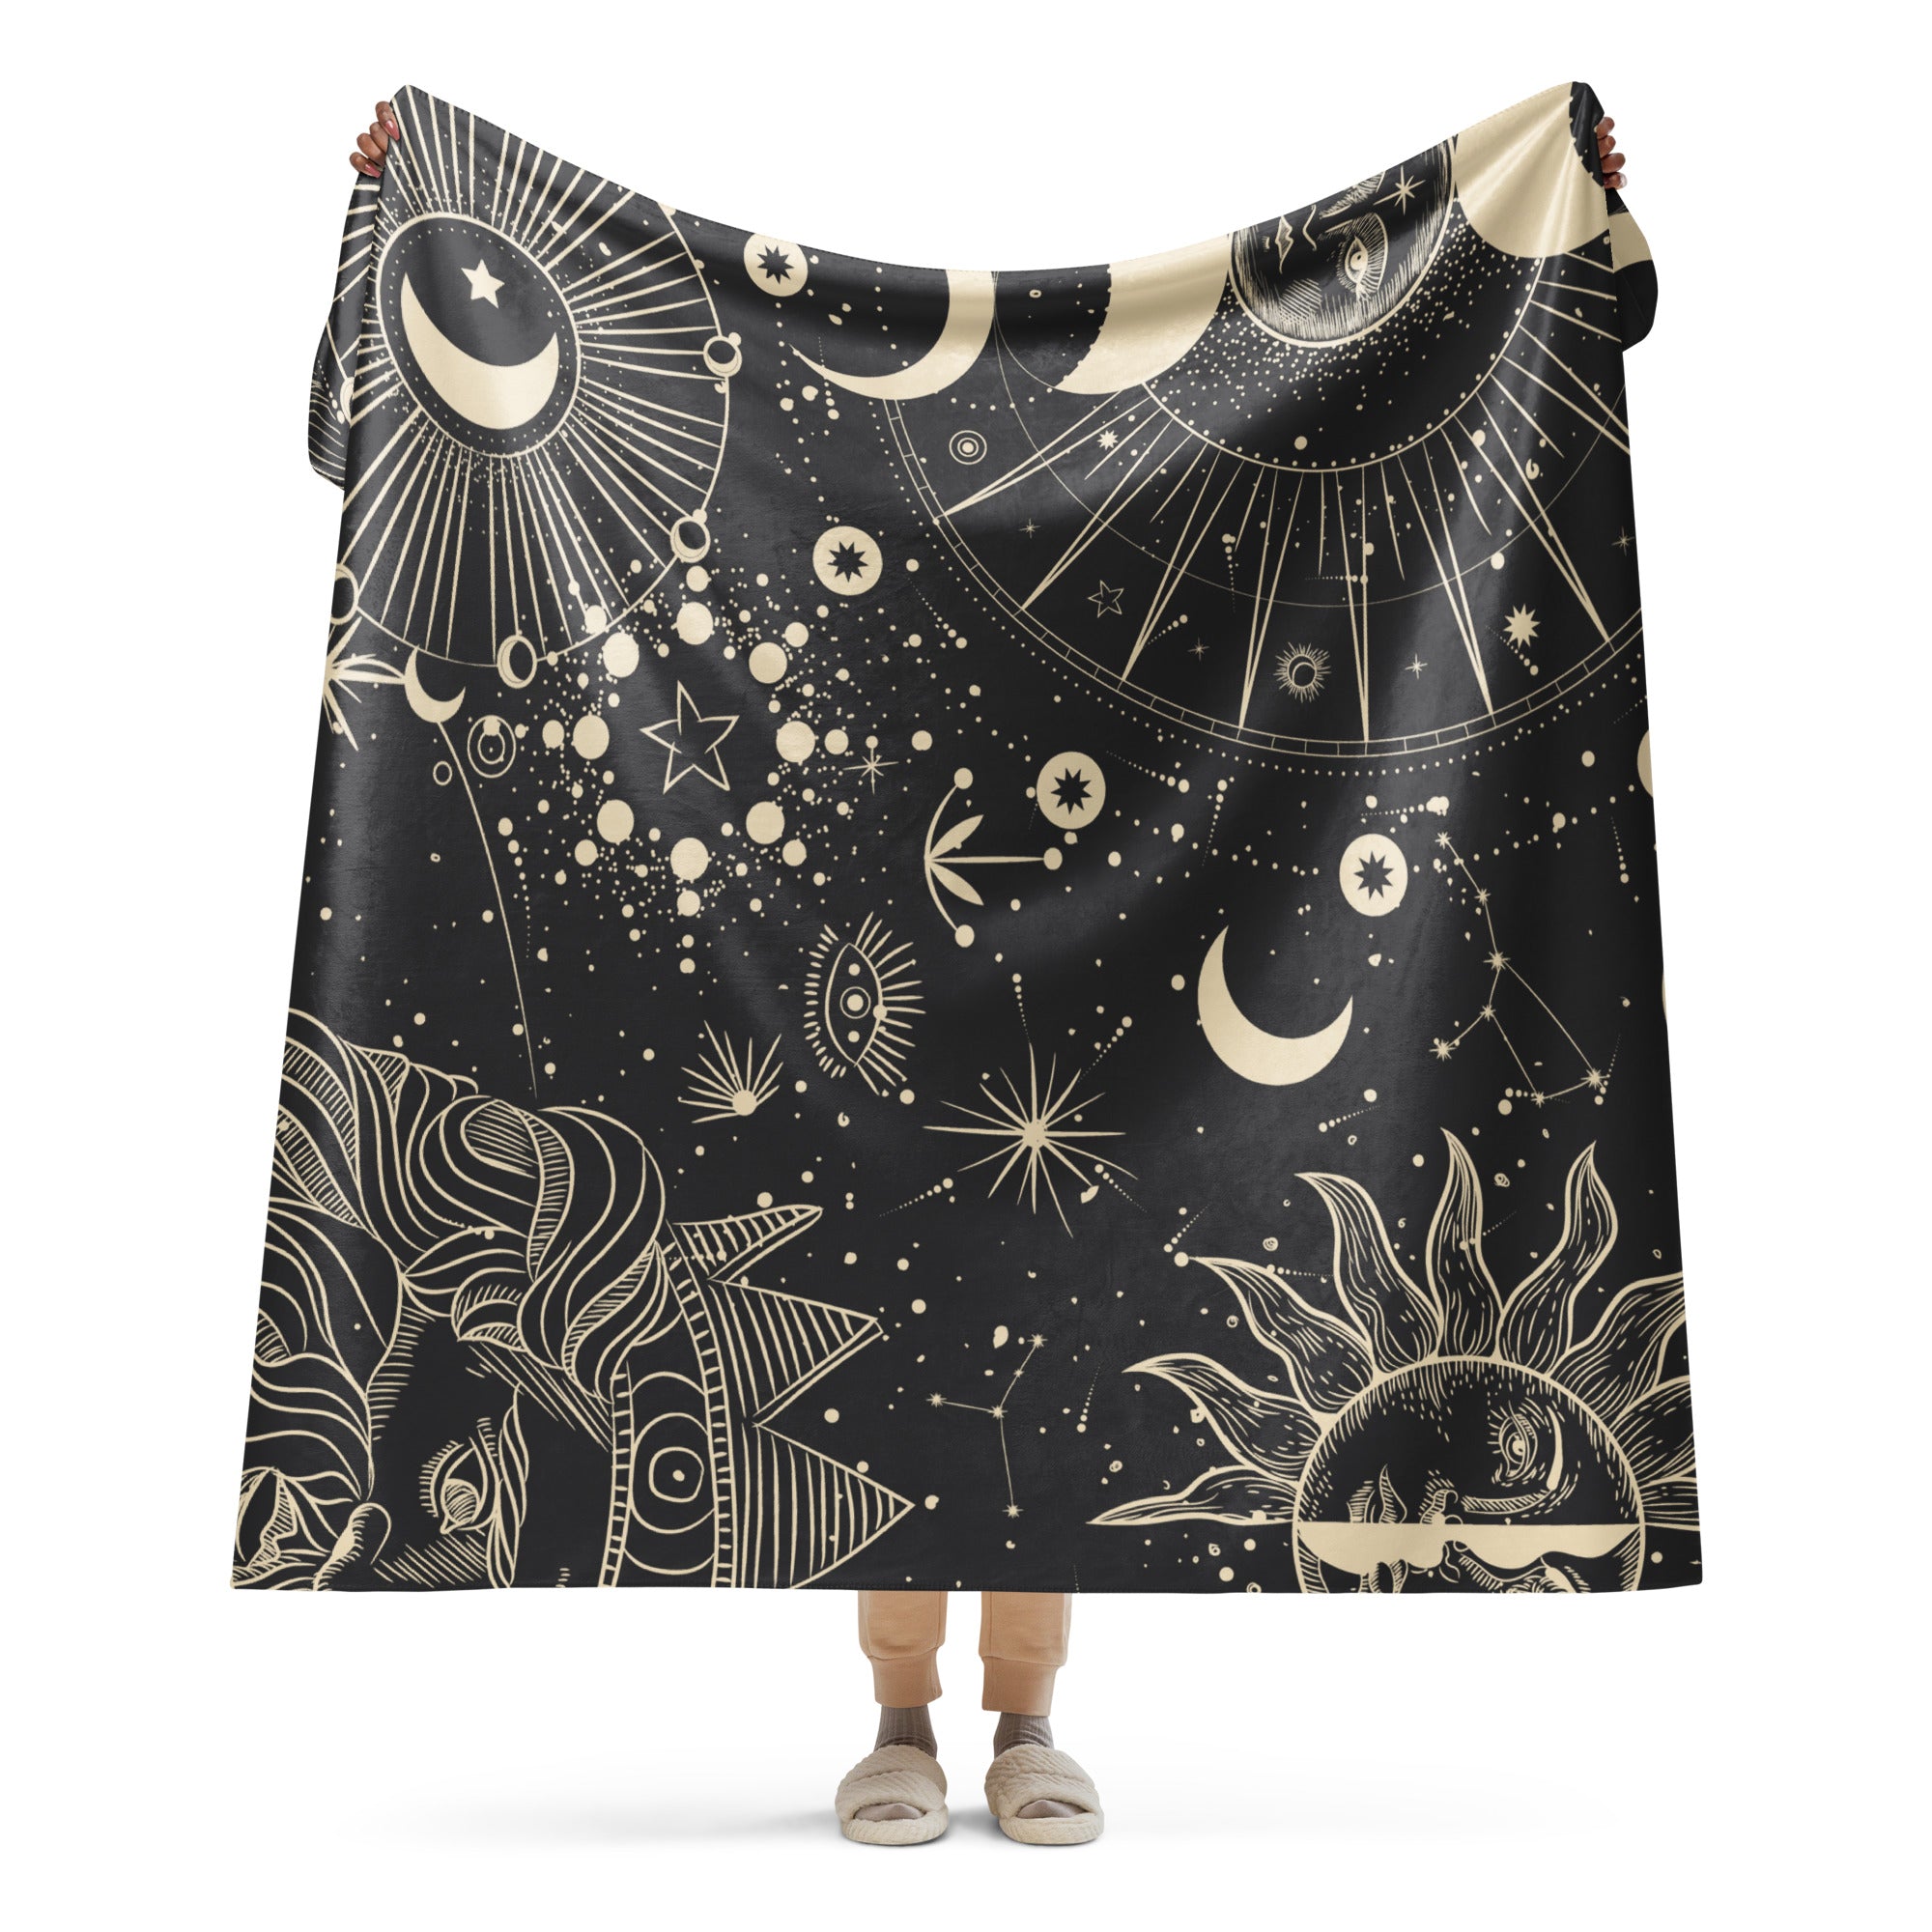 Astronomy Sherpa blanket